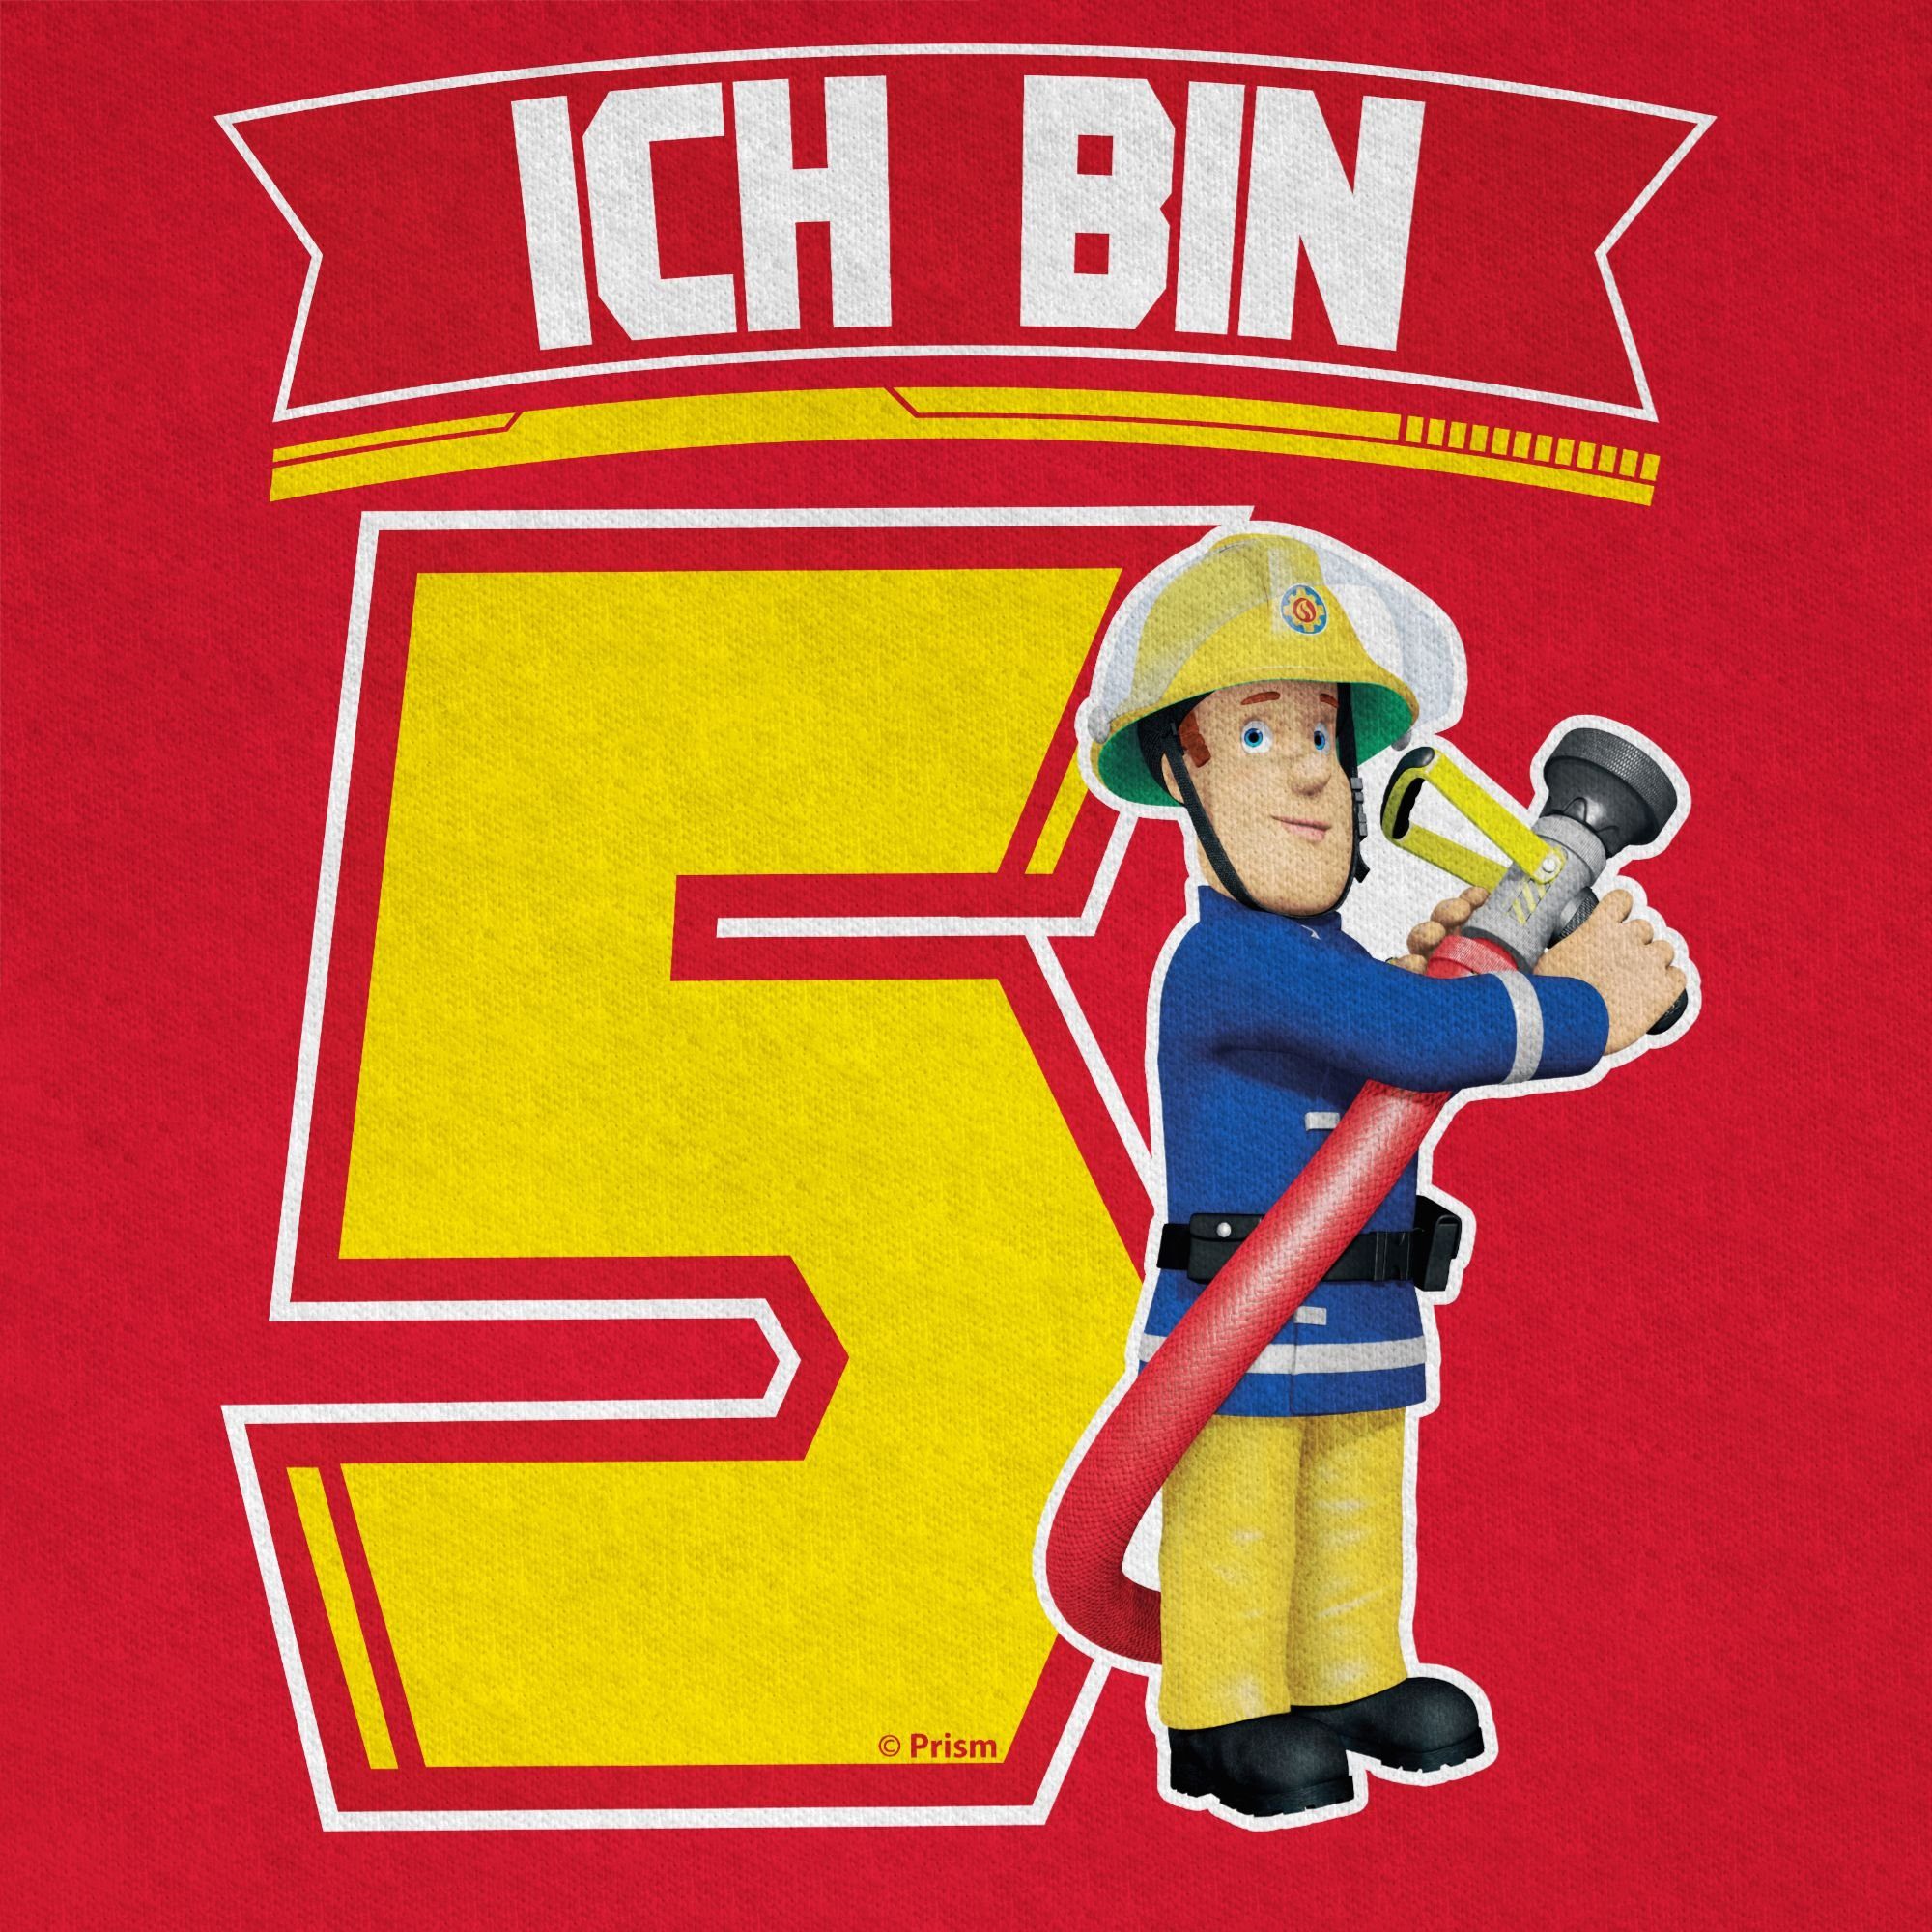 - Ich Feuerwehrmann 5 T-Shirt Sam Rot Jungen bin Sam Shirtracer 01